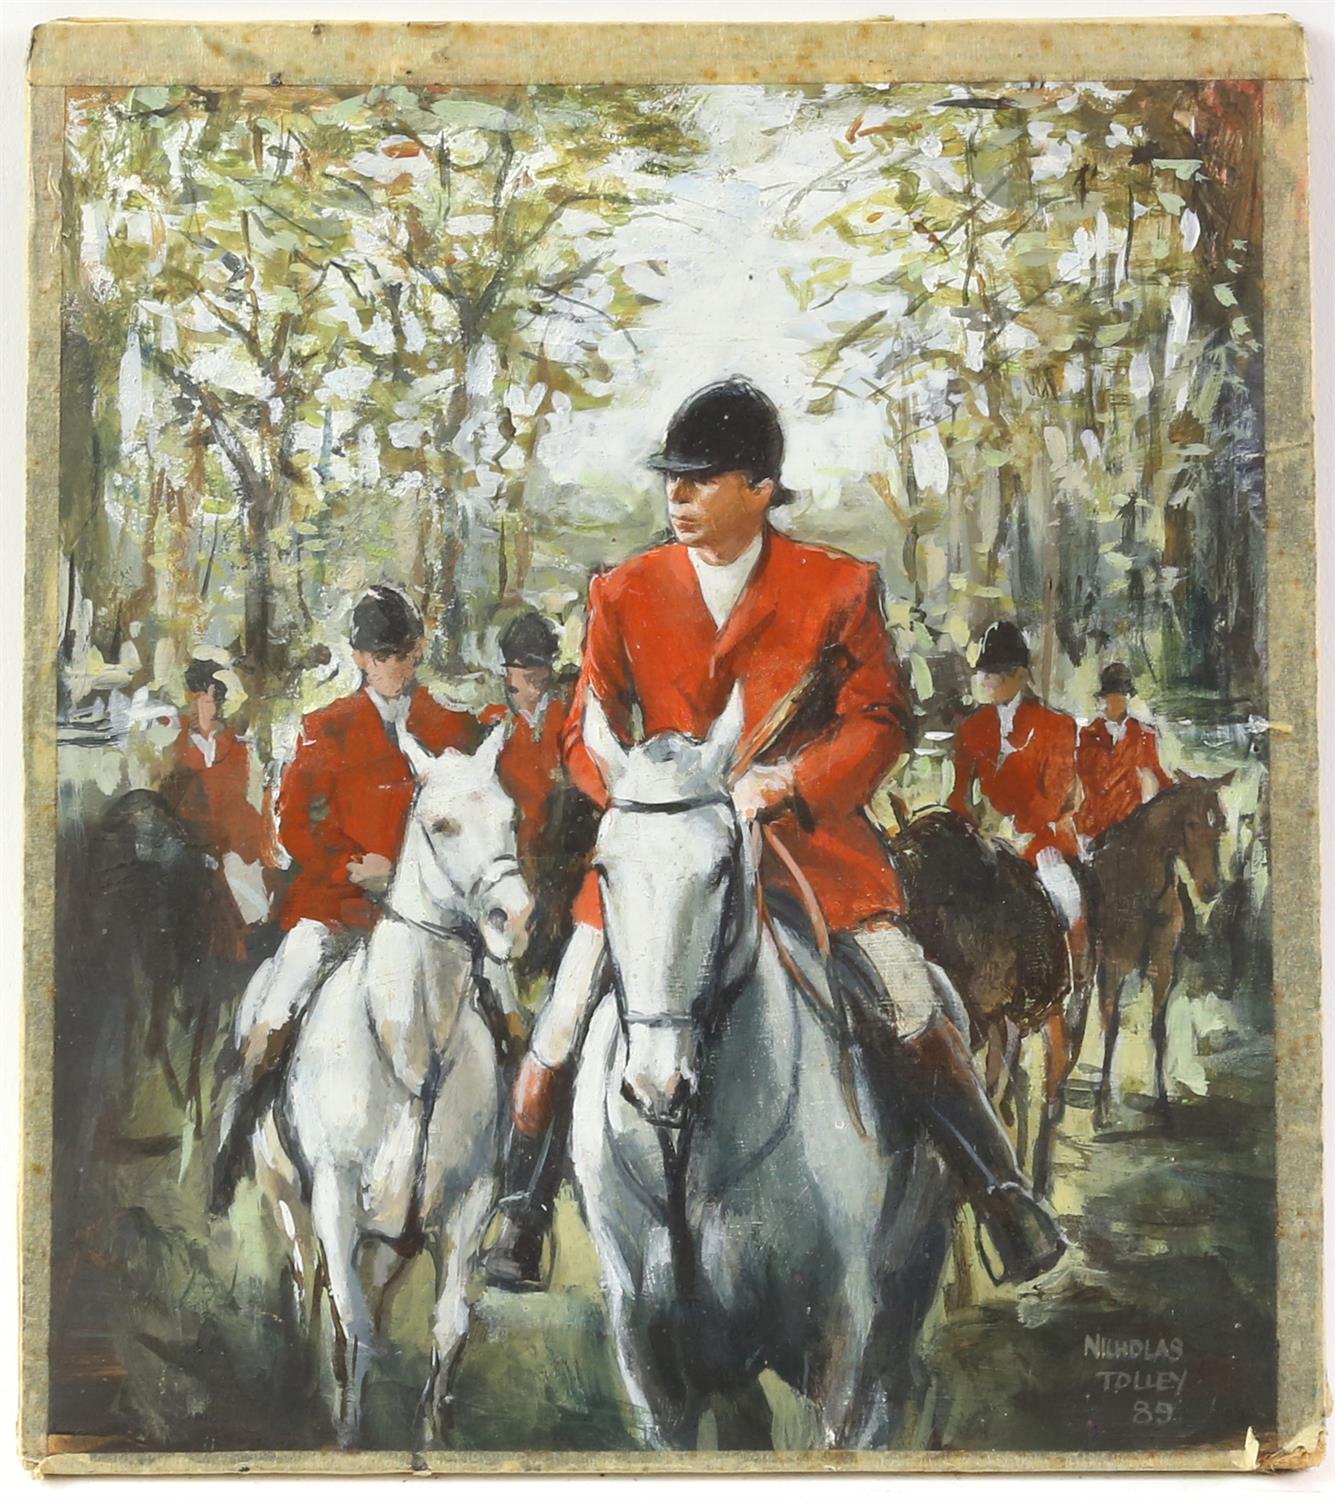 § Nicholas Tolley (British, b. 1958), huntsmen on horseback, signed and dated '89, oil on board, 21.